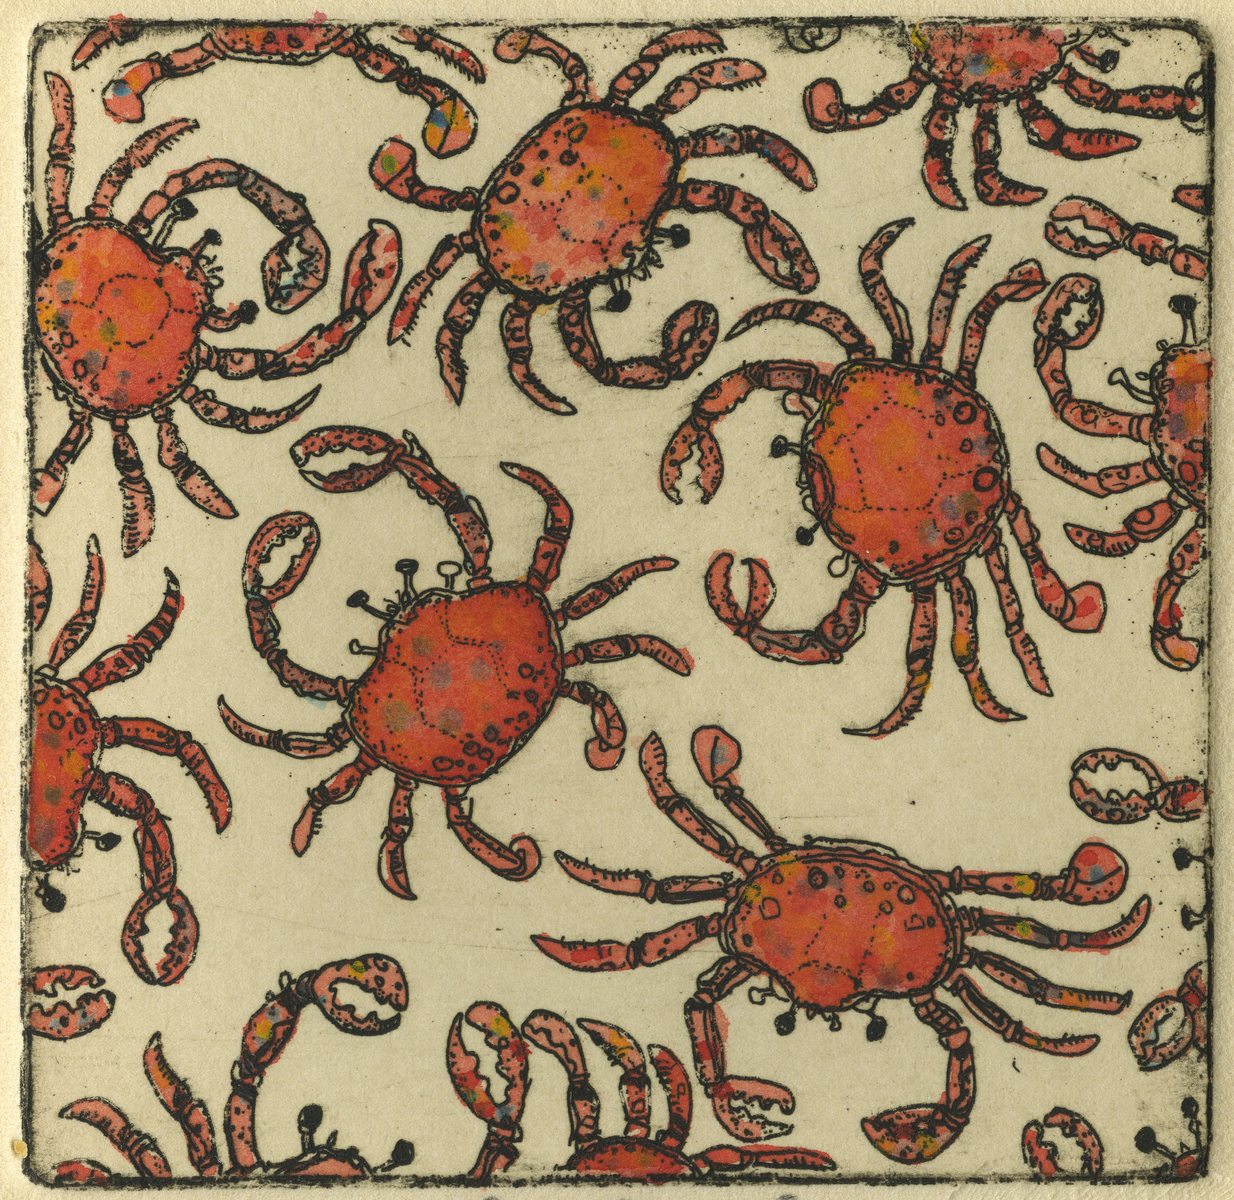 Congregated Creatures – Crabs